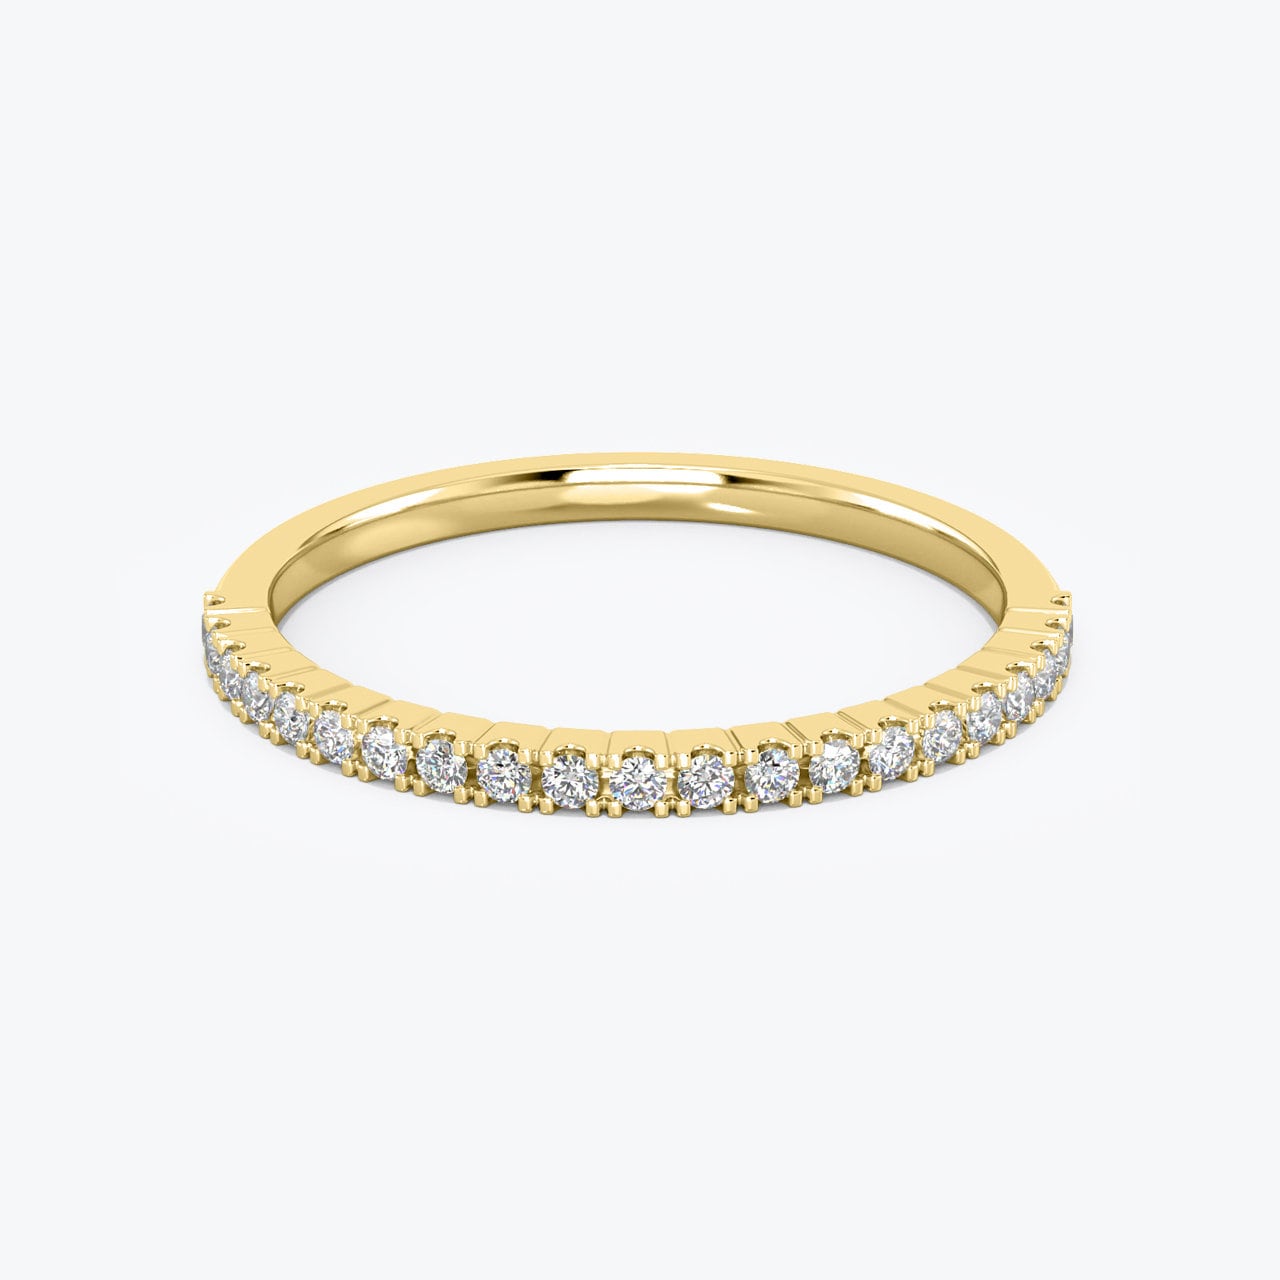 Diamond Eternity Ring, 14k Gold Half Eternity Diamond Wedding Ring, Stackable Diamond Ring, 0.22Ct Natural diamond, White, Rose, Anniversary